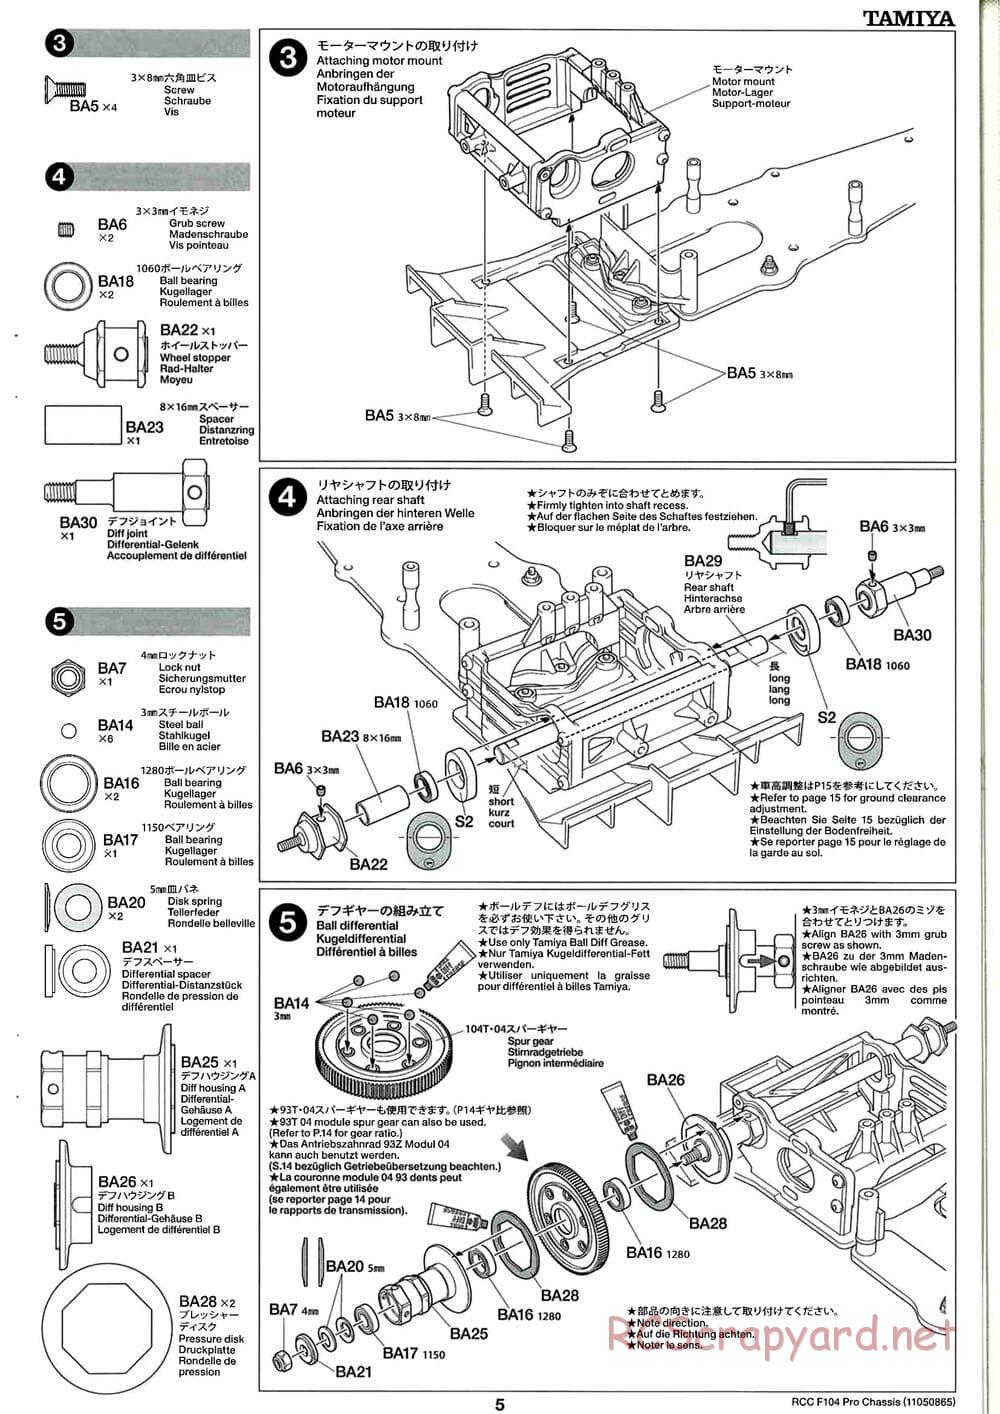 Tamiya - F104 Pro Chassis - Manual - Page 5